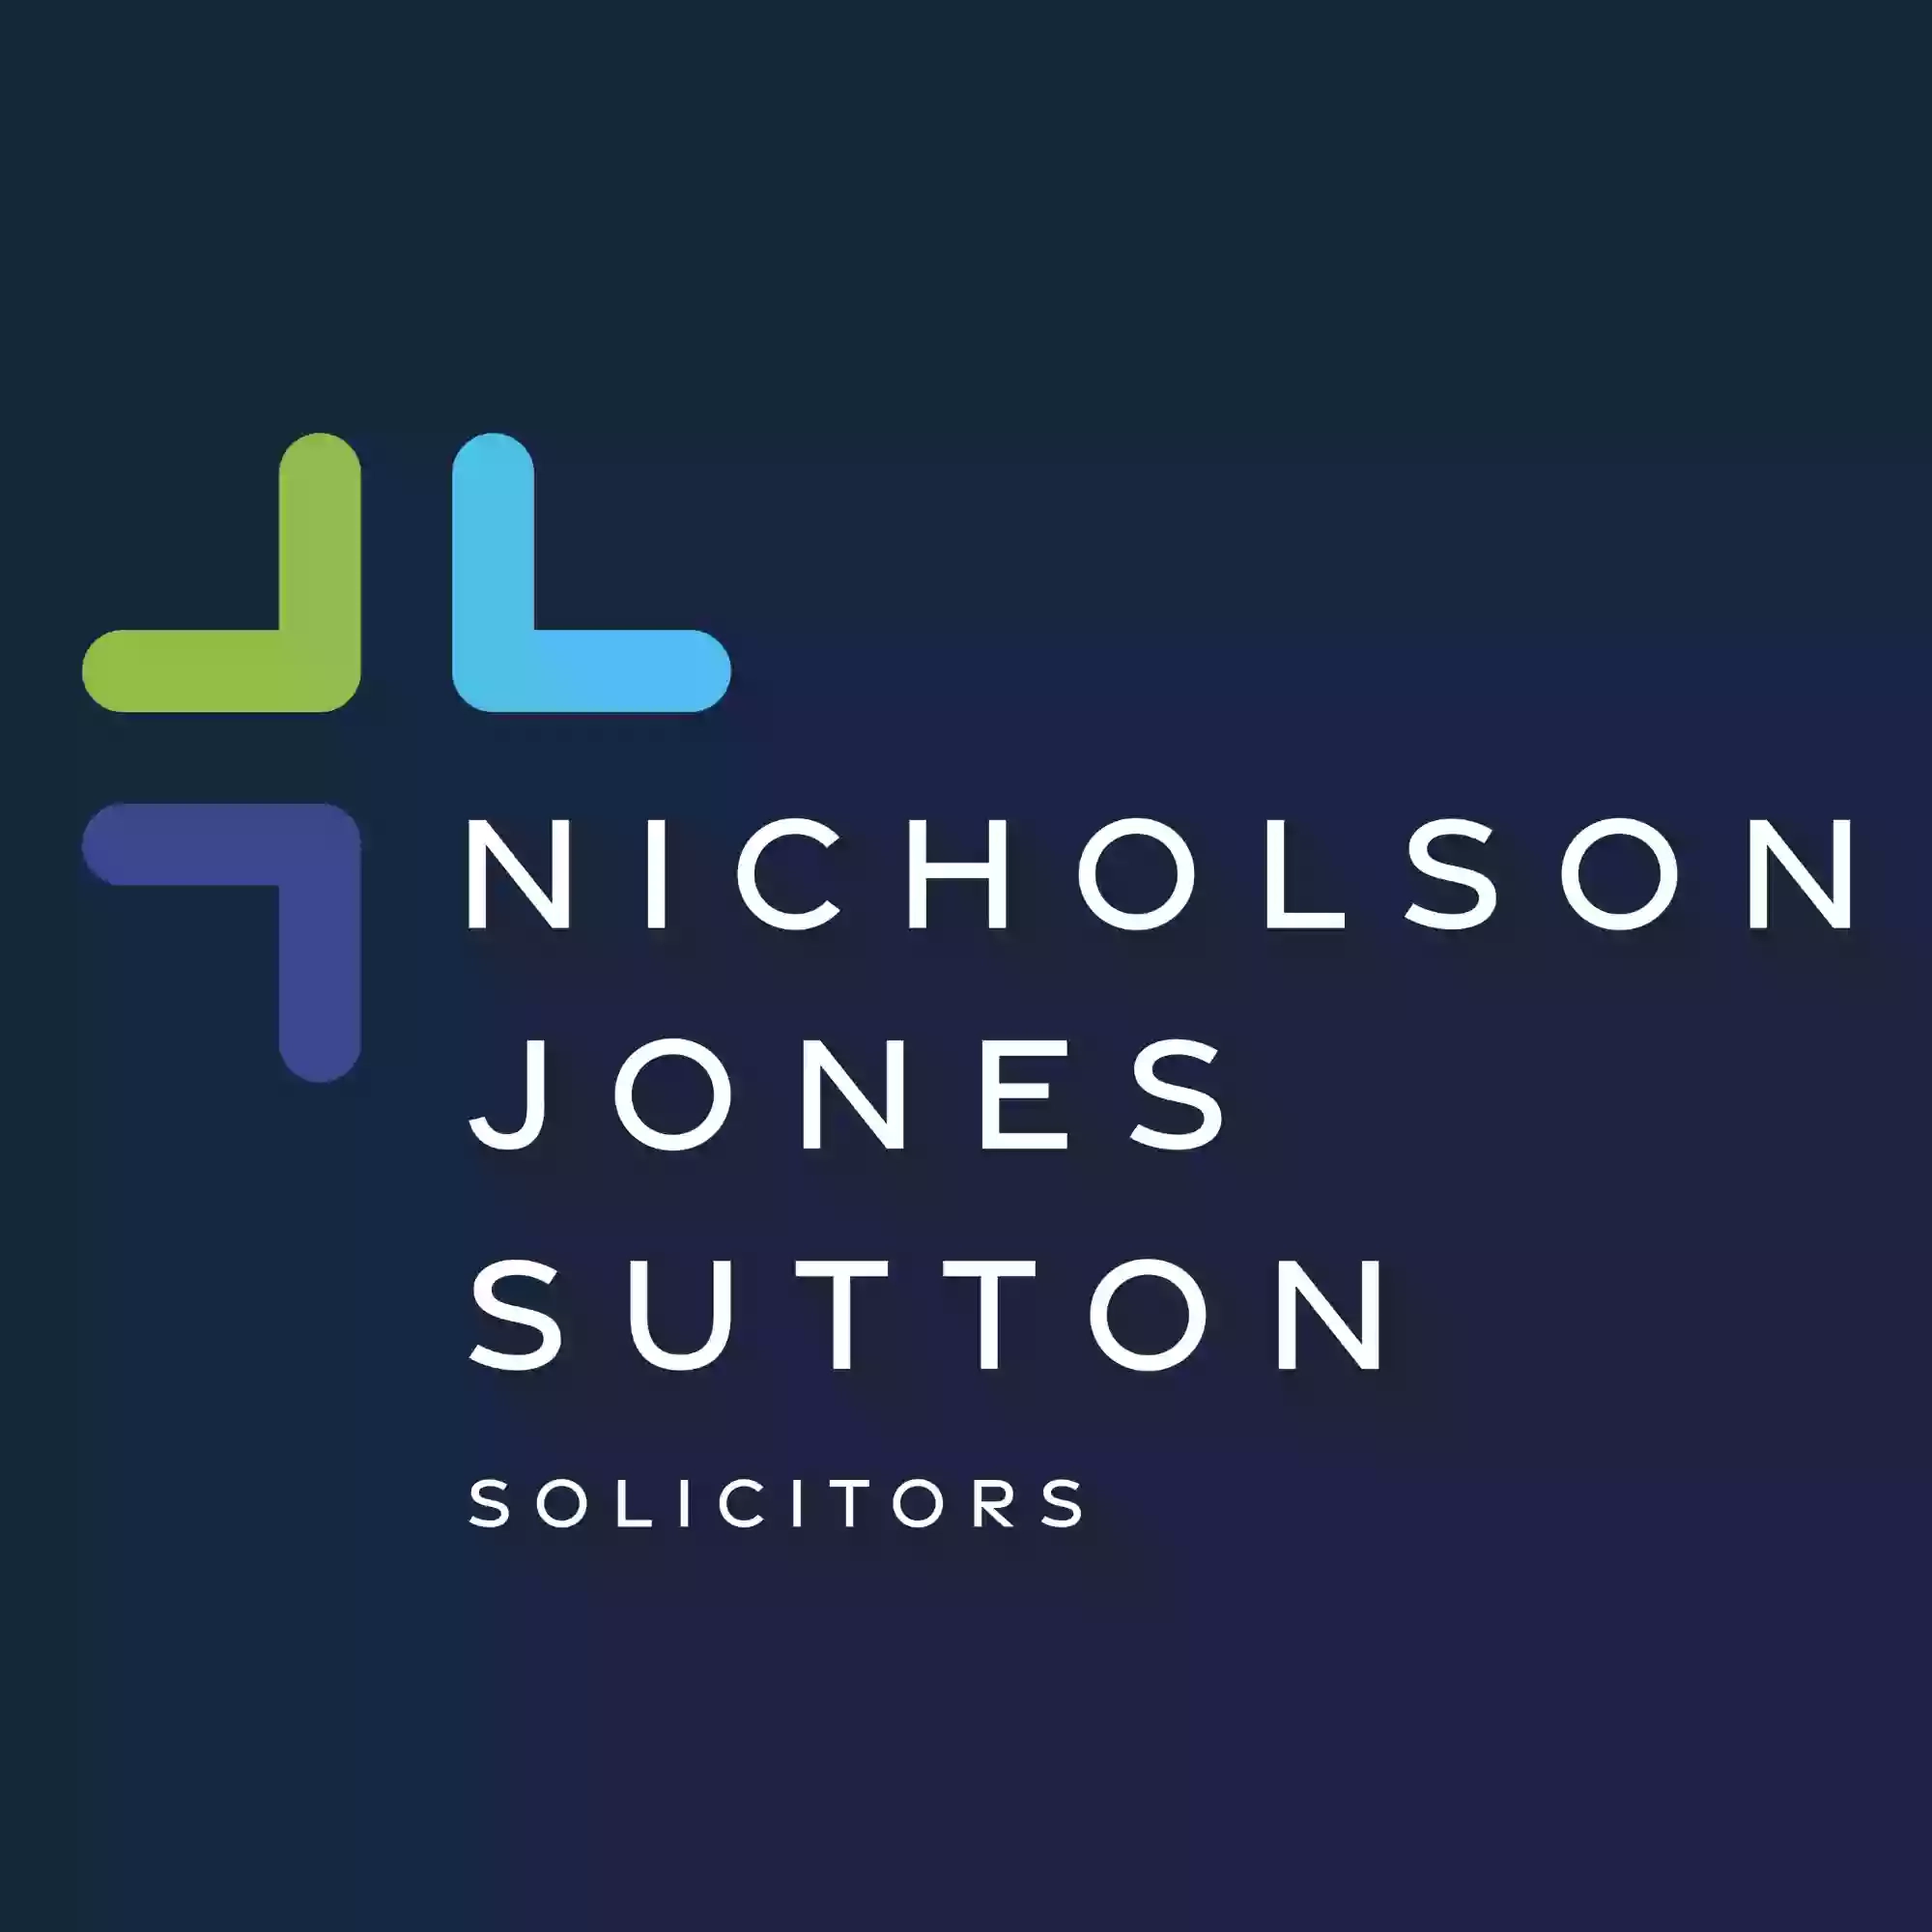 Nicholson Jones Sutton Solicitors